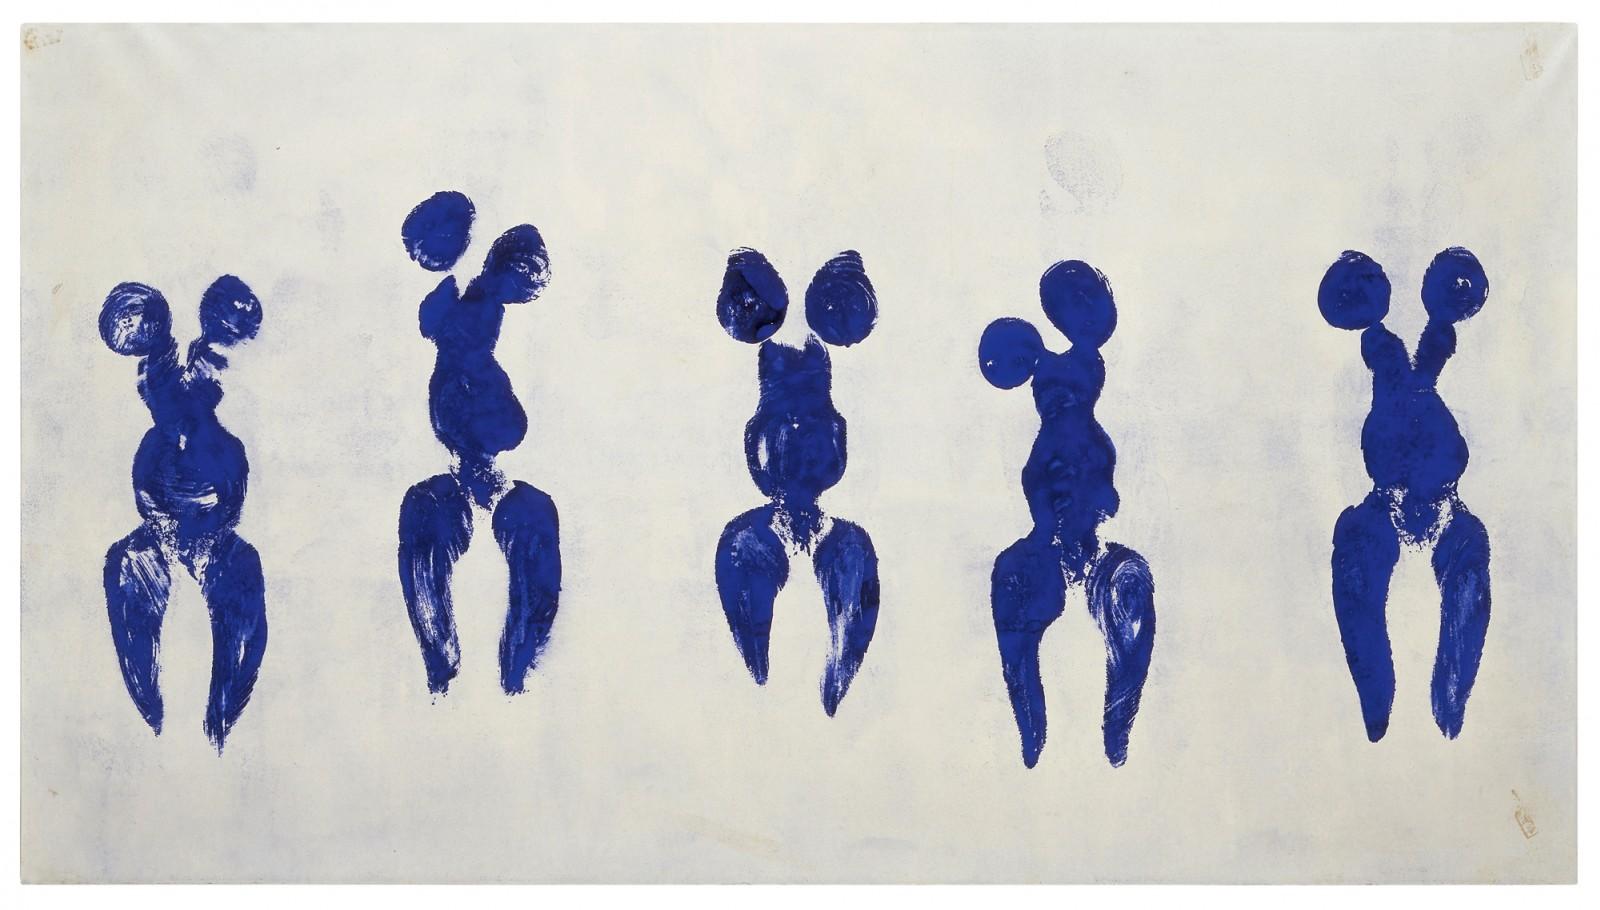 12 Anthropometrie de lEpoque Bleue [Anthropometry of the Blue Period] (ANT 82) 1960.jpeg